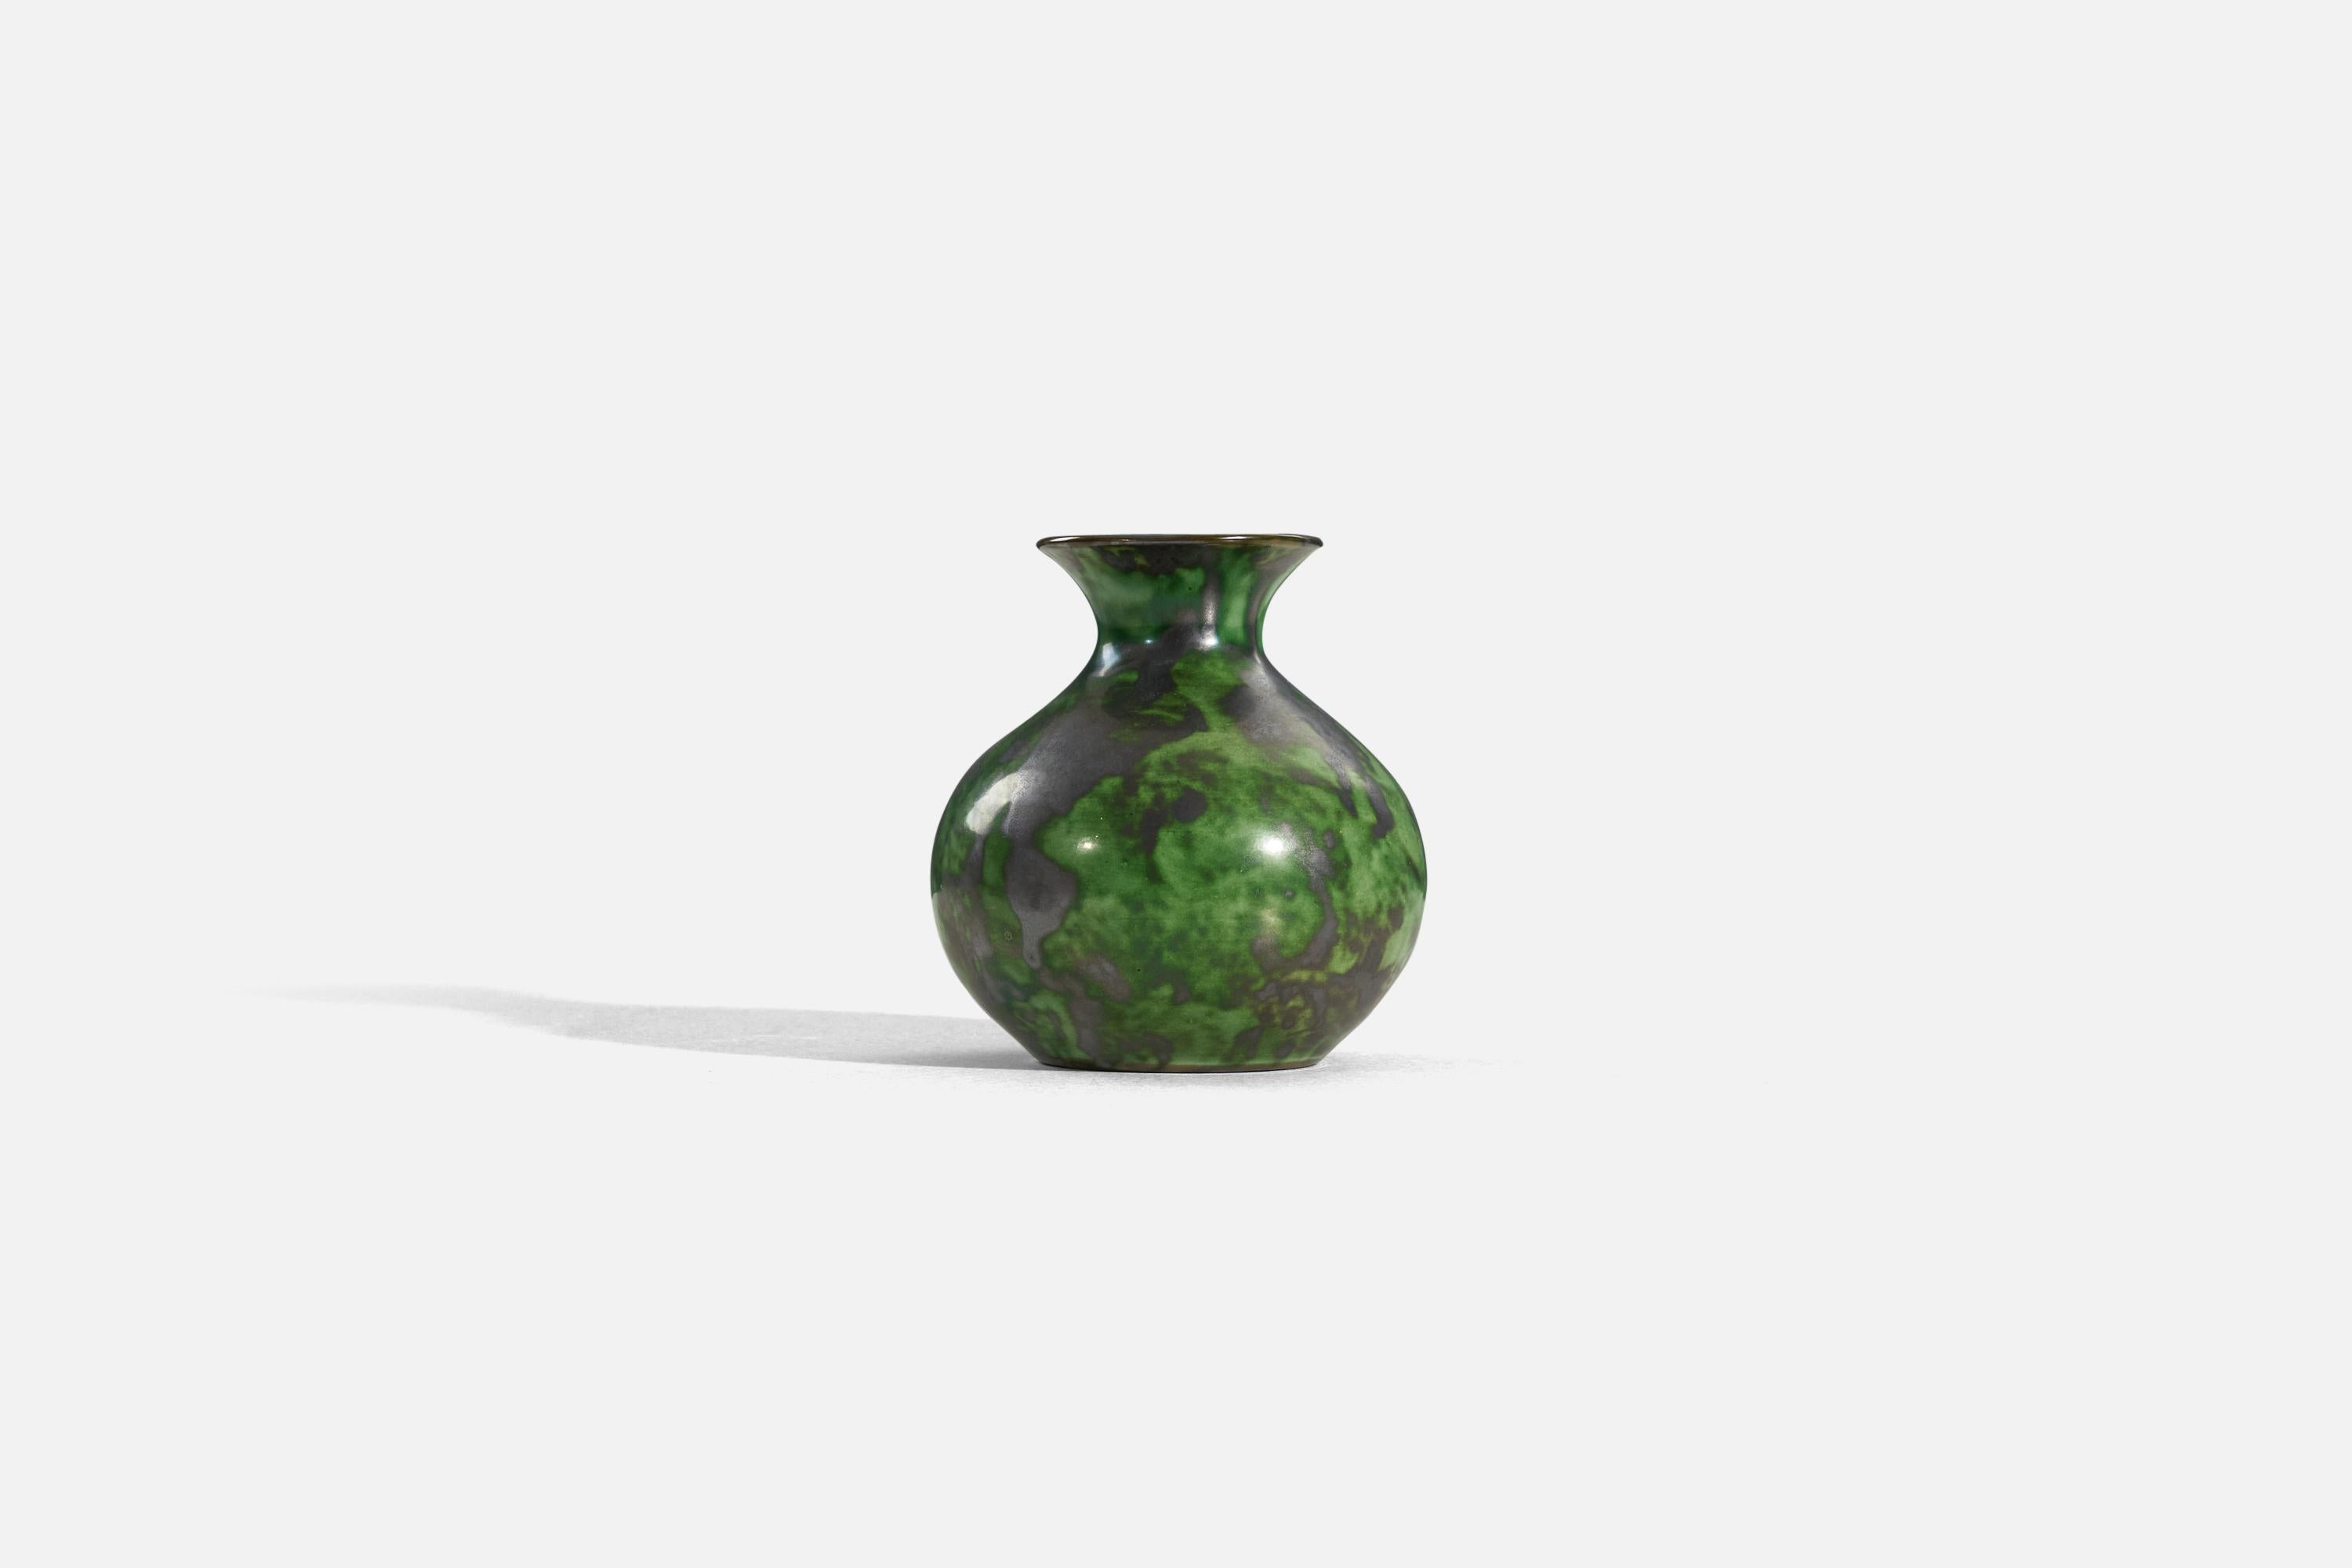 A green-glazed earthenware vase designed by Erik Mornils and produced by Nittsjö, Sweden, 1940s.

